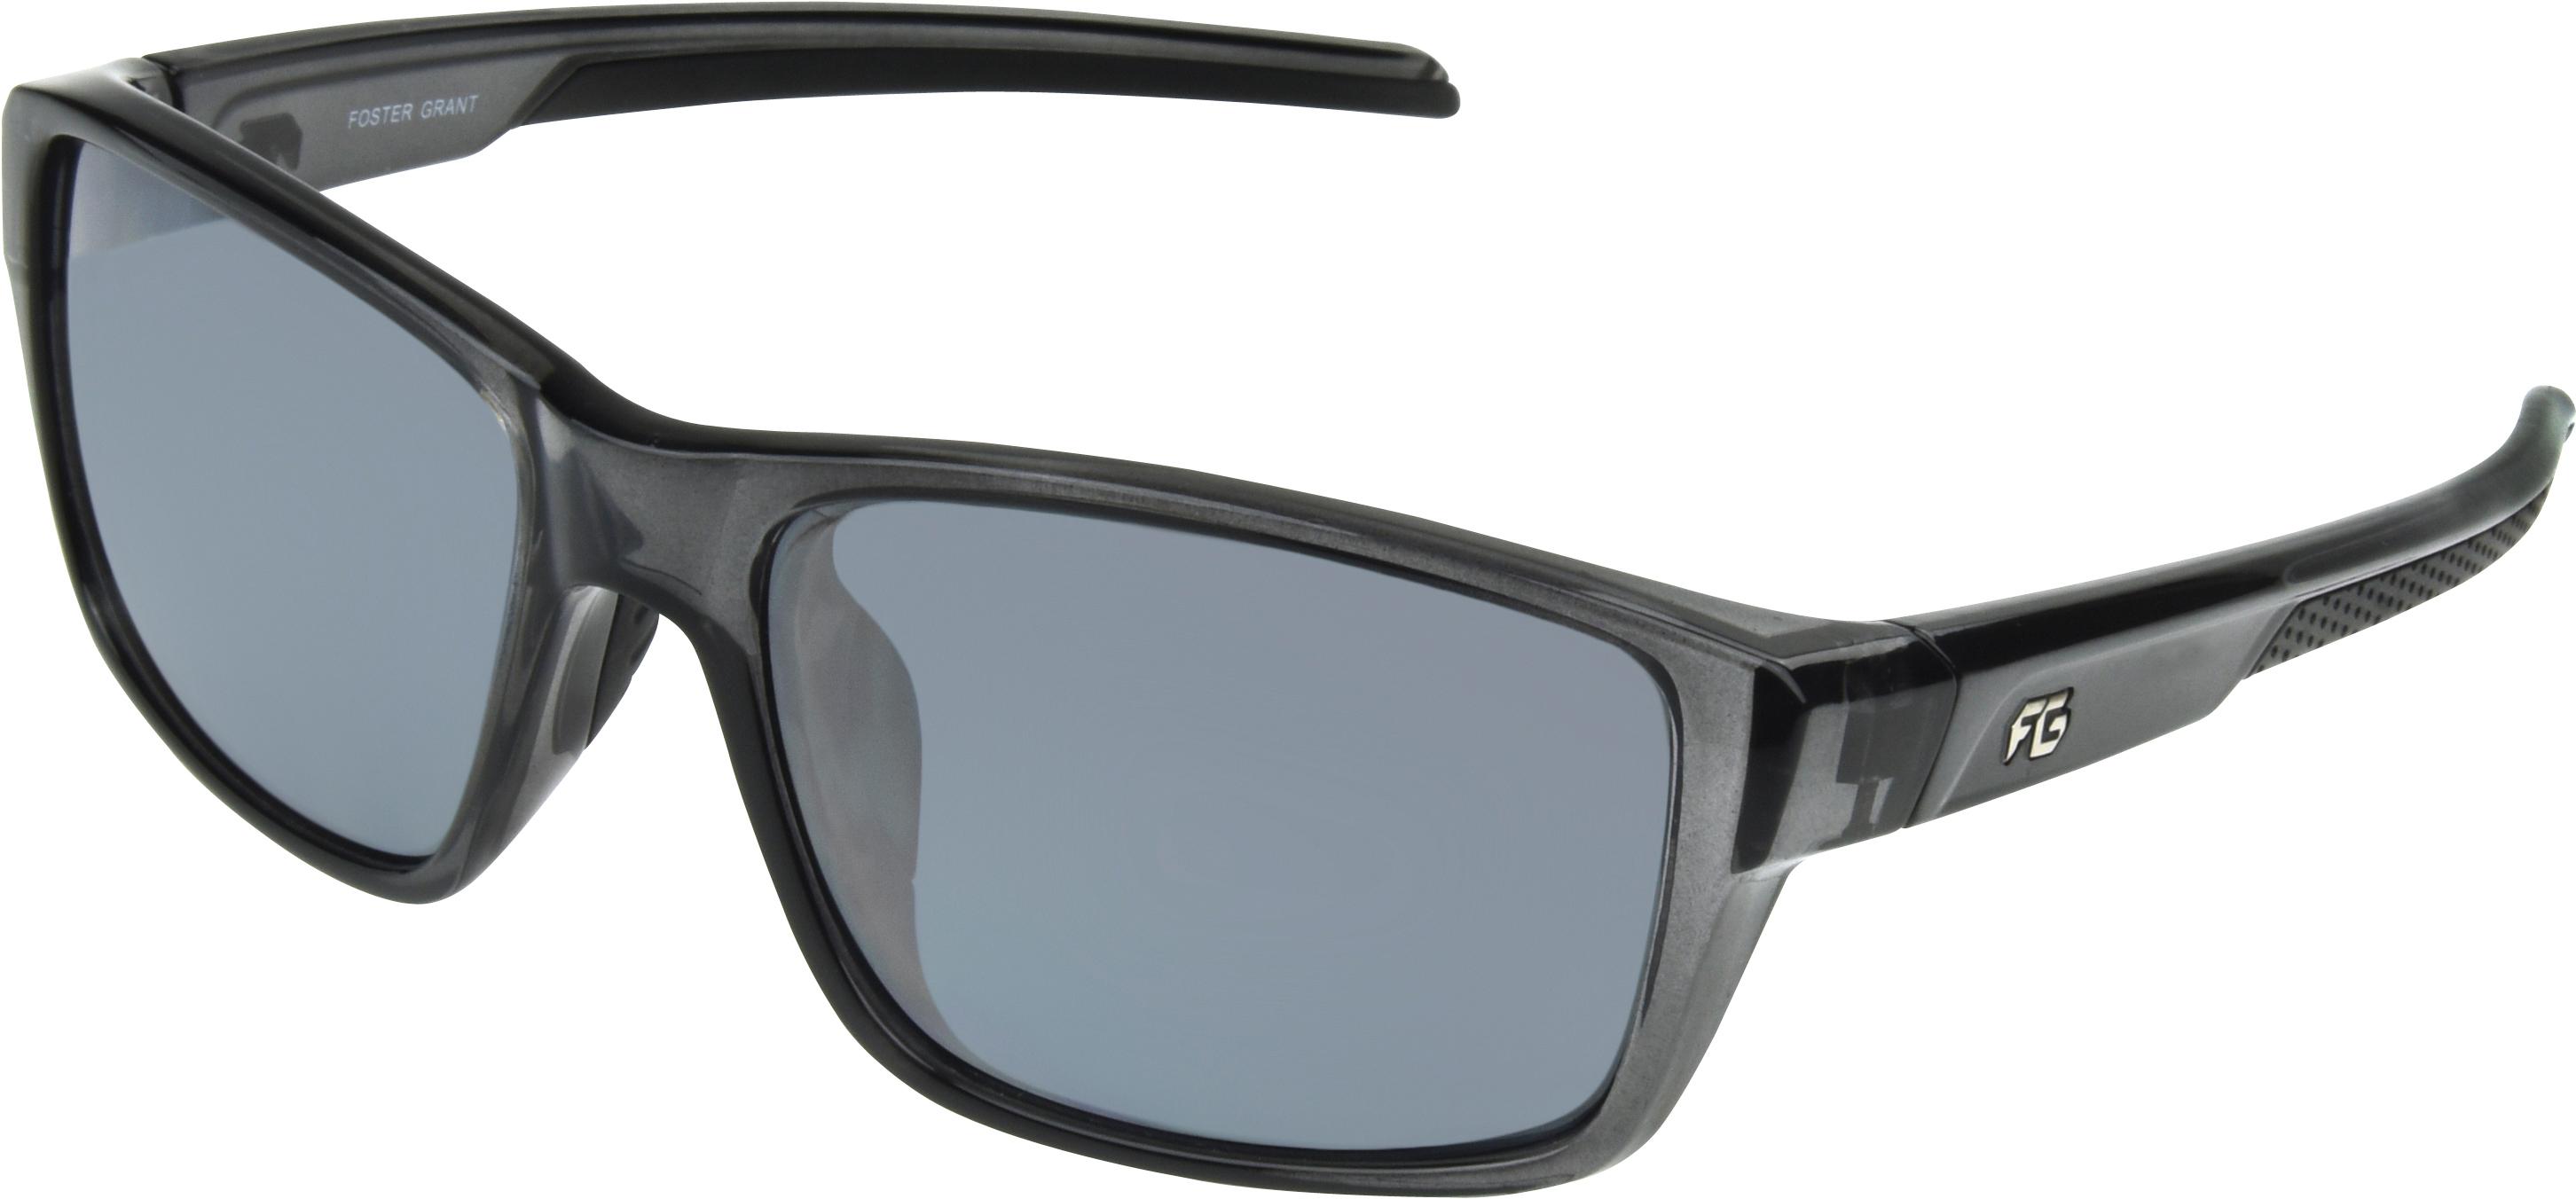 Foster Grant Lfd 19 08 Grey Sunglasses